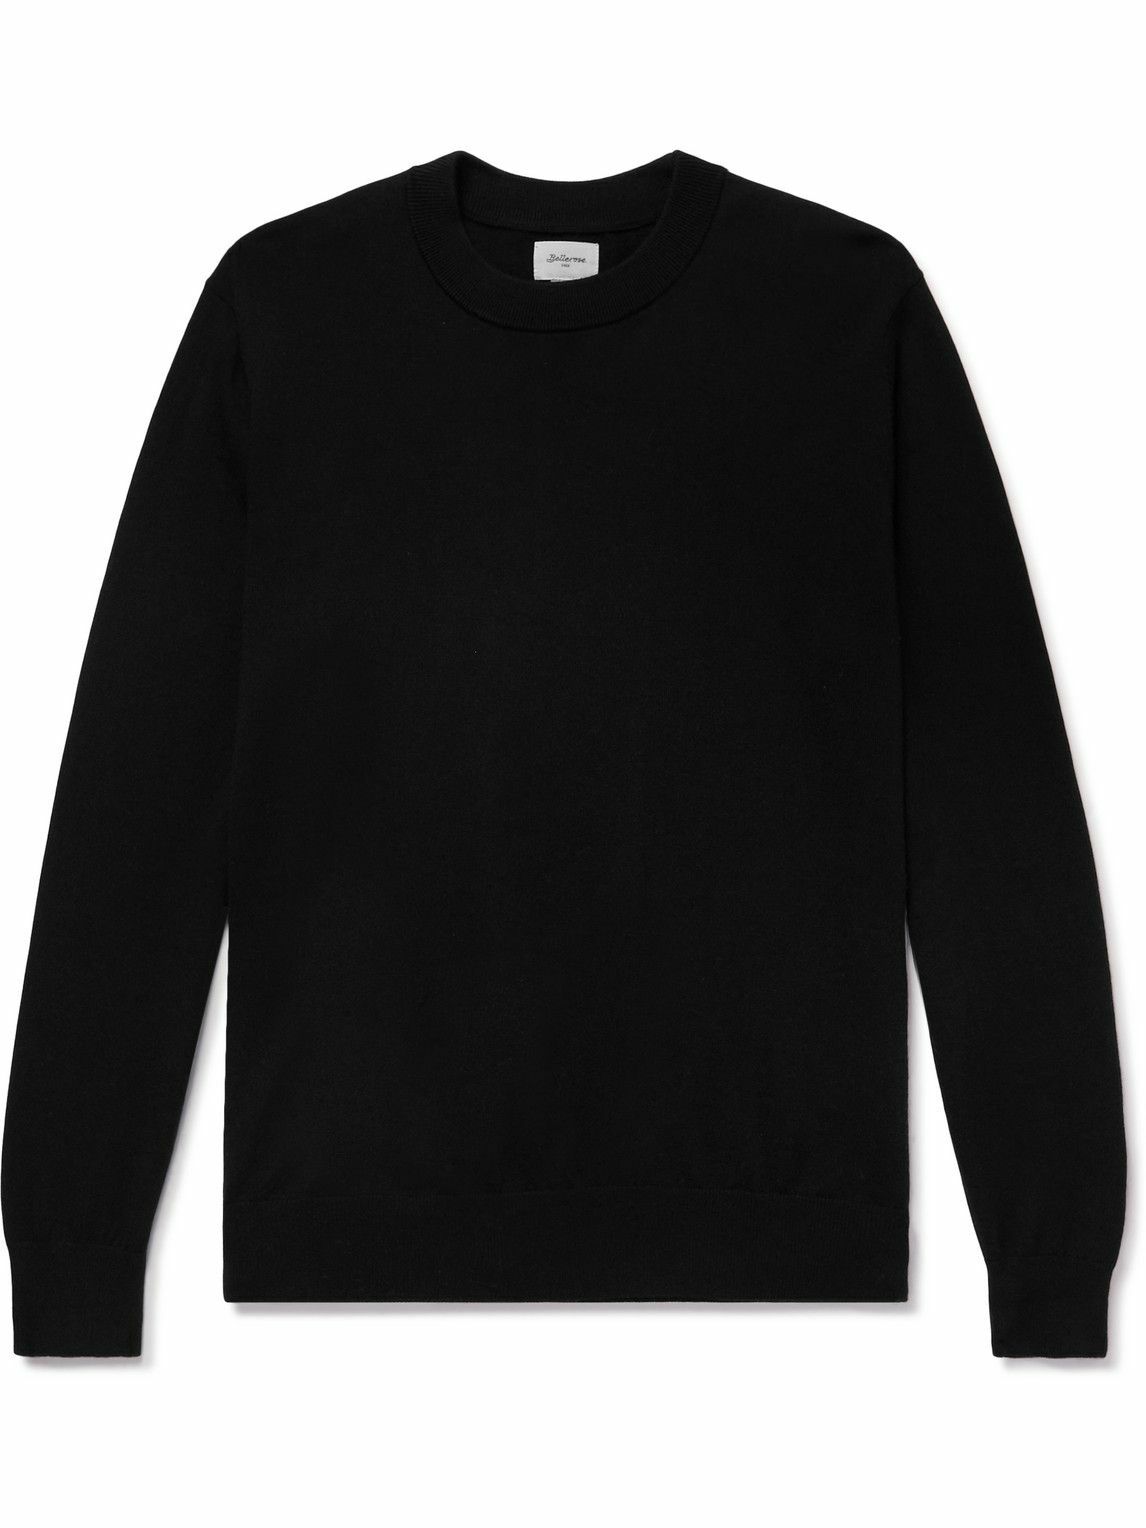 Bellerose - Merino Wool Sweater - Black Bellerose